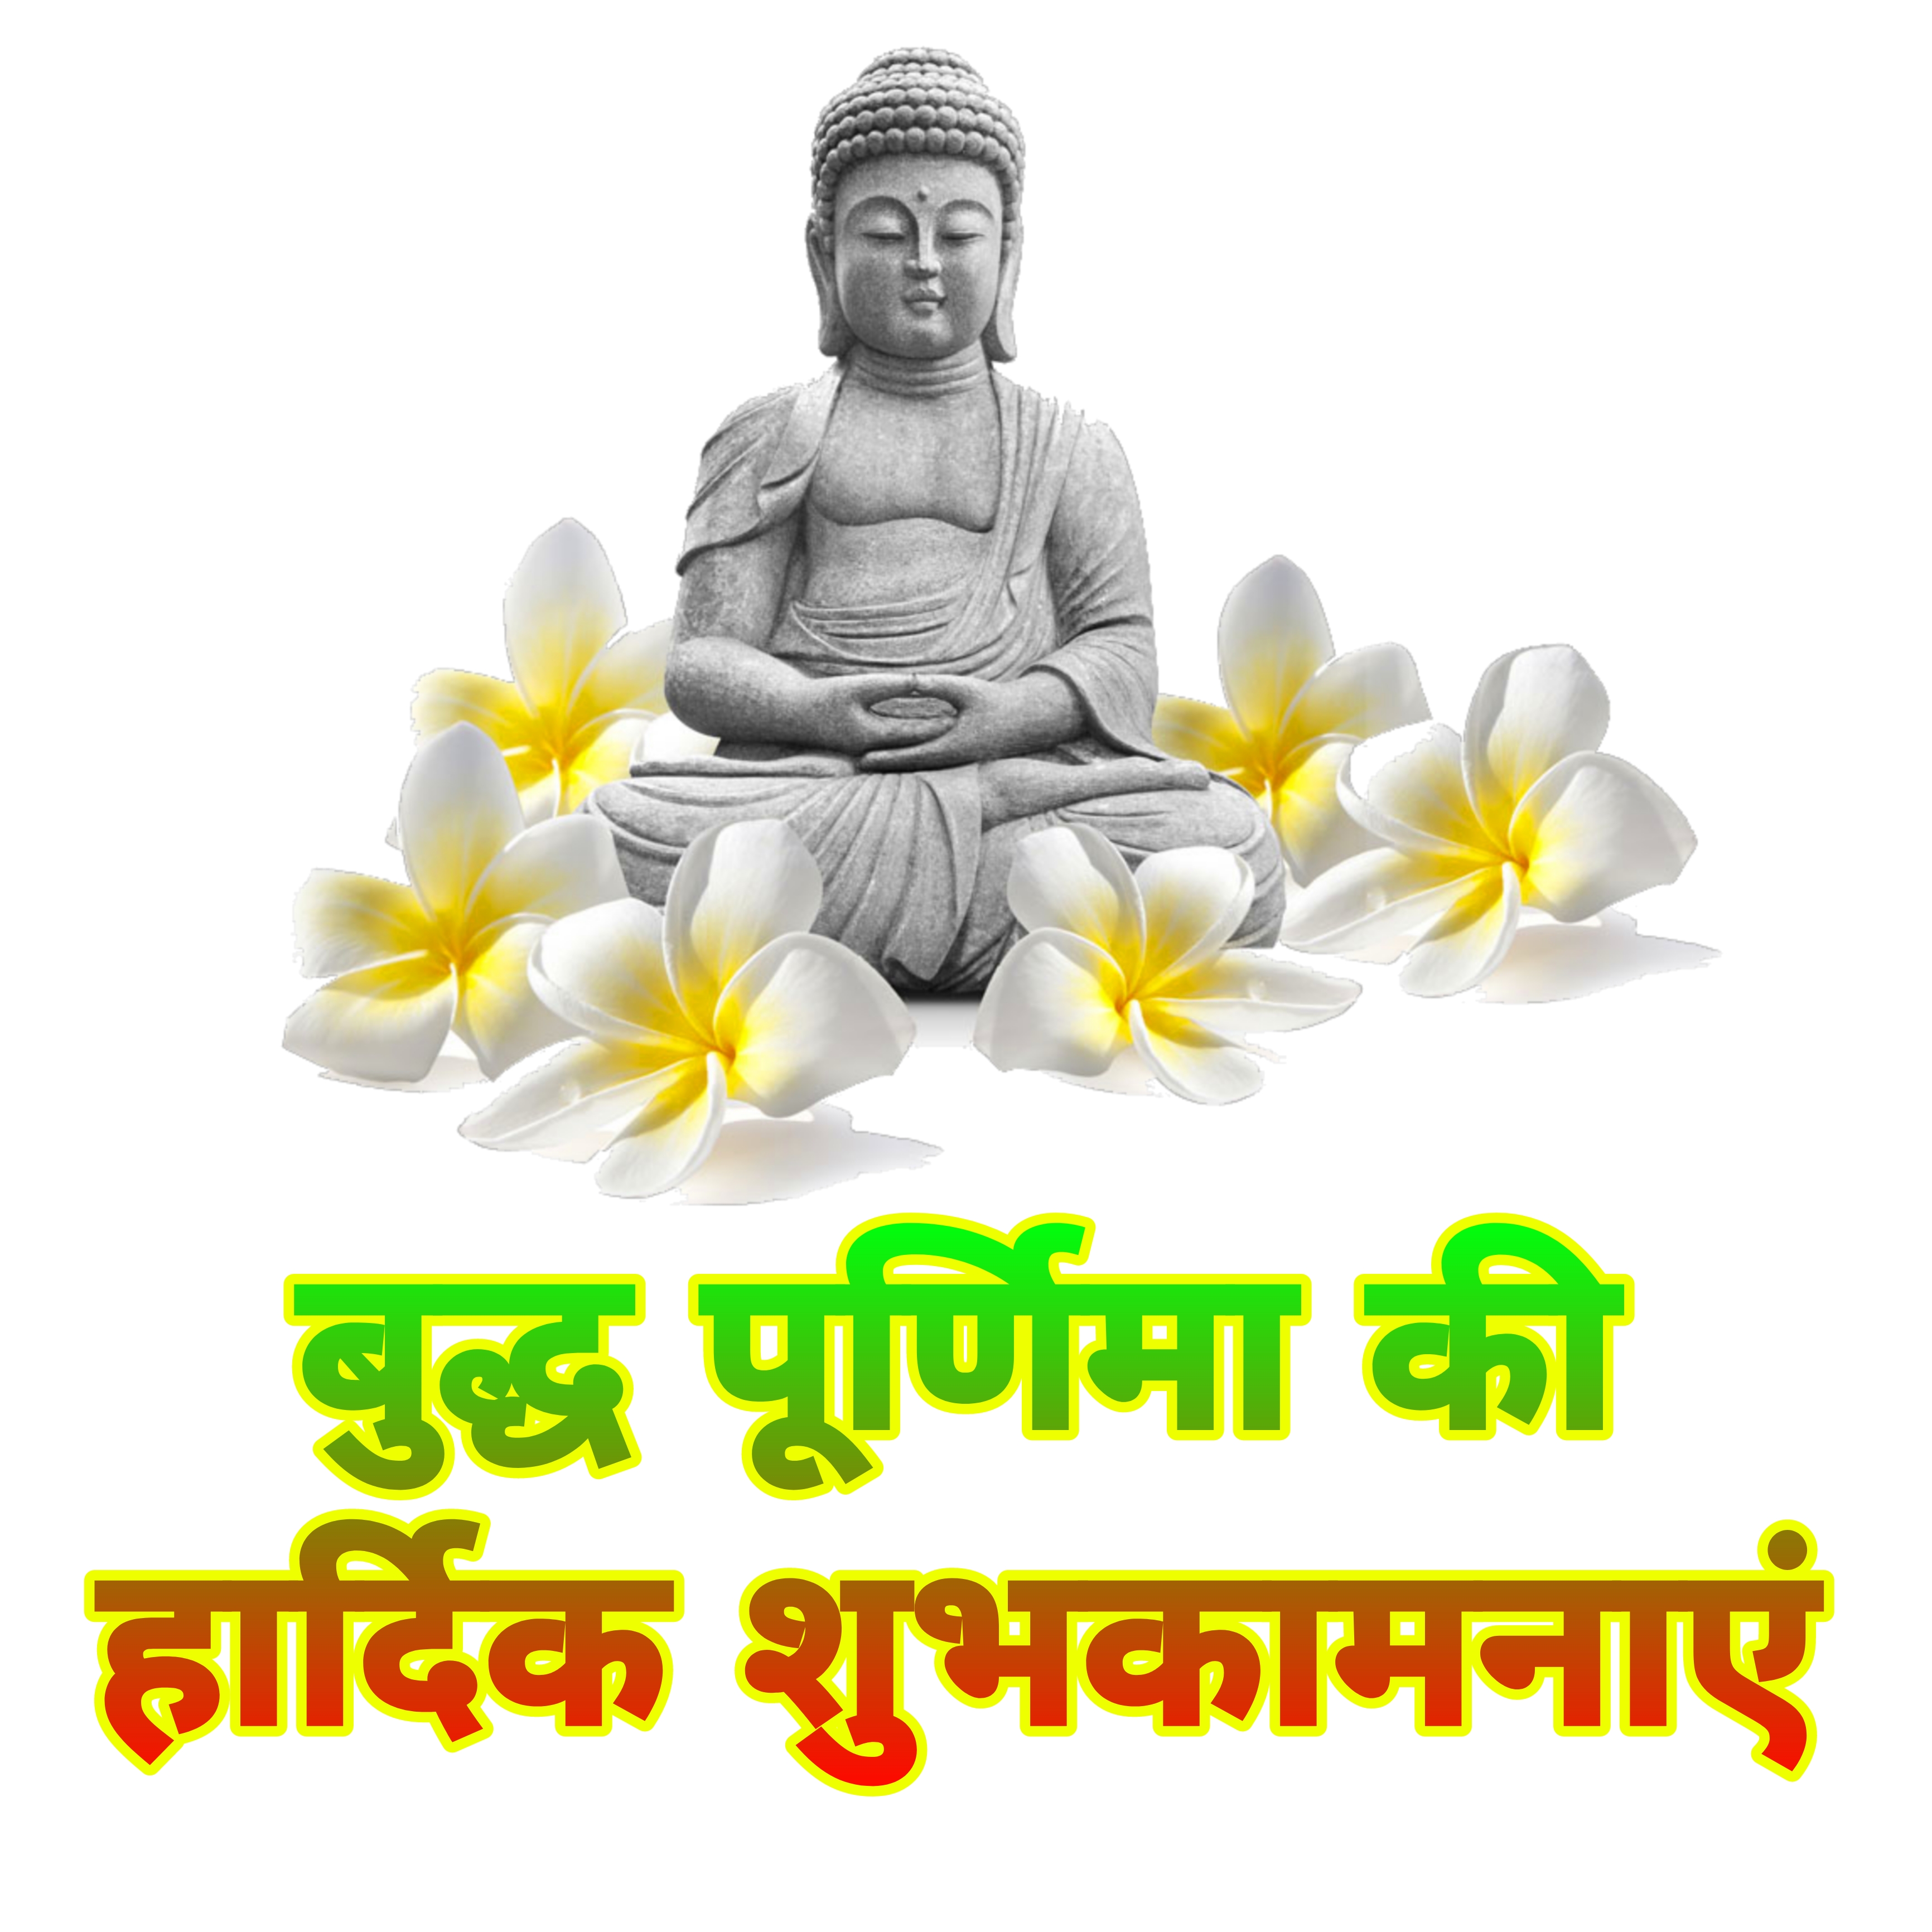 बुद्ध पूर्णिमा की हार्दिक शुभकामनाएं | Happy buddha purnima images | Buddha  purnima ki hardik shubhkamnaye